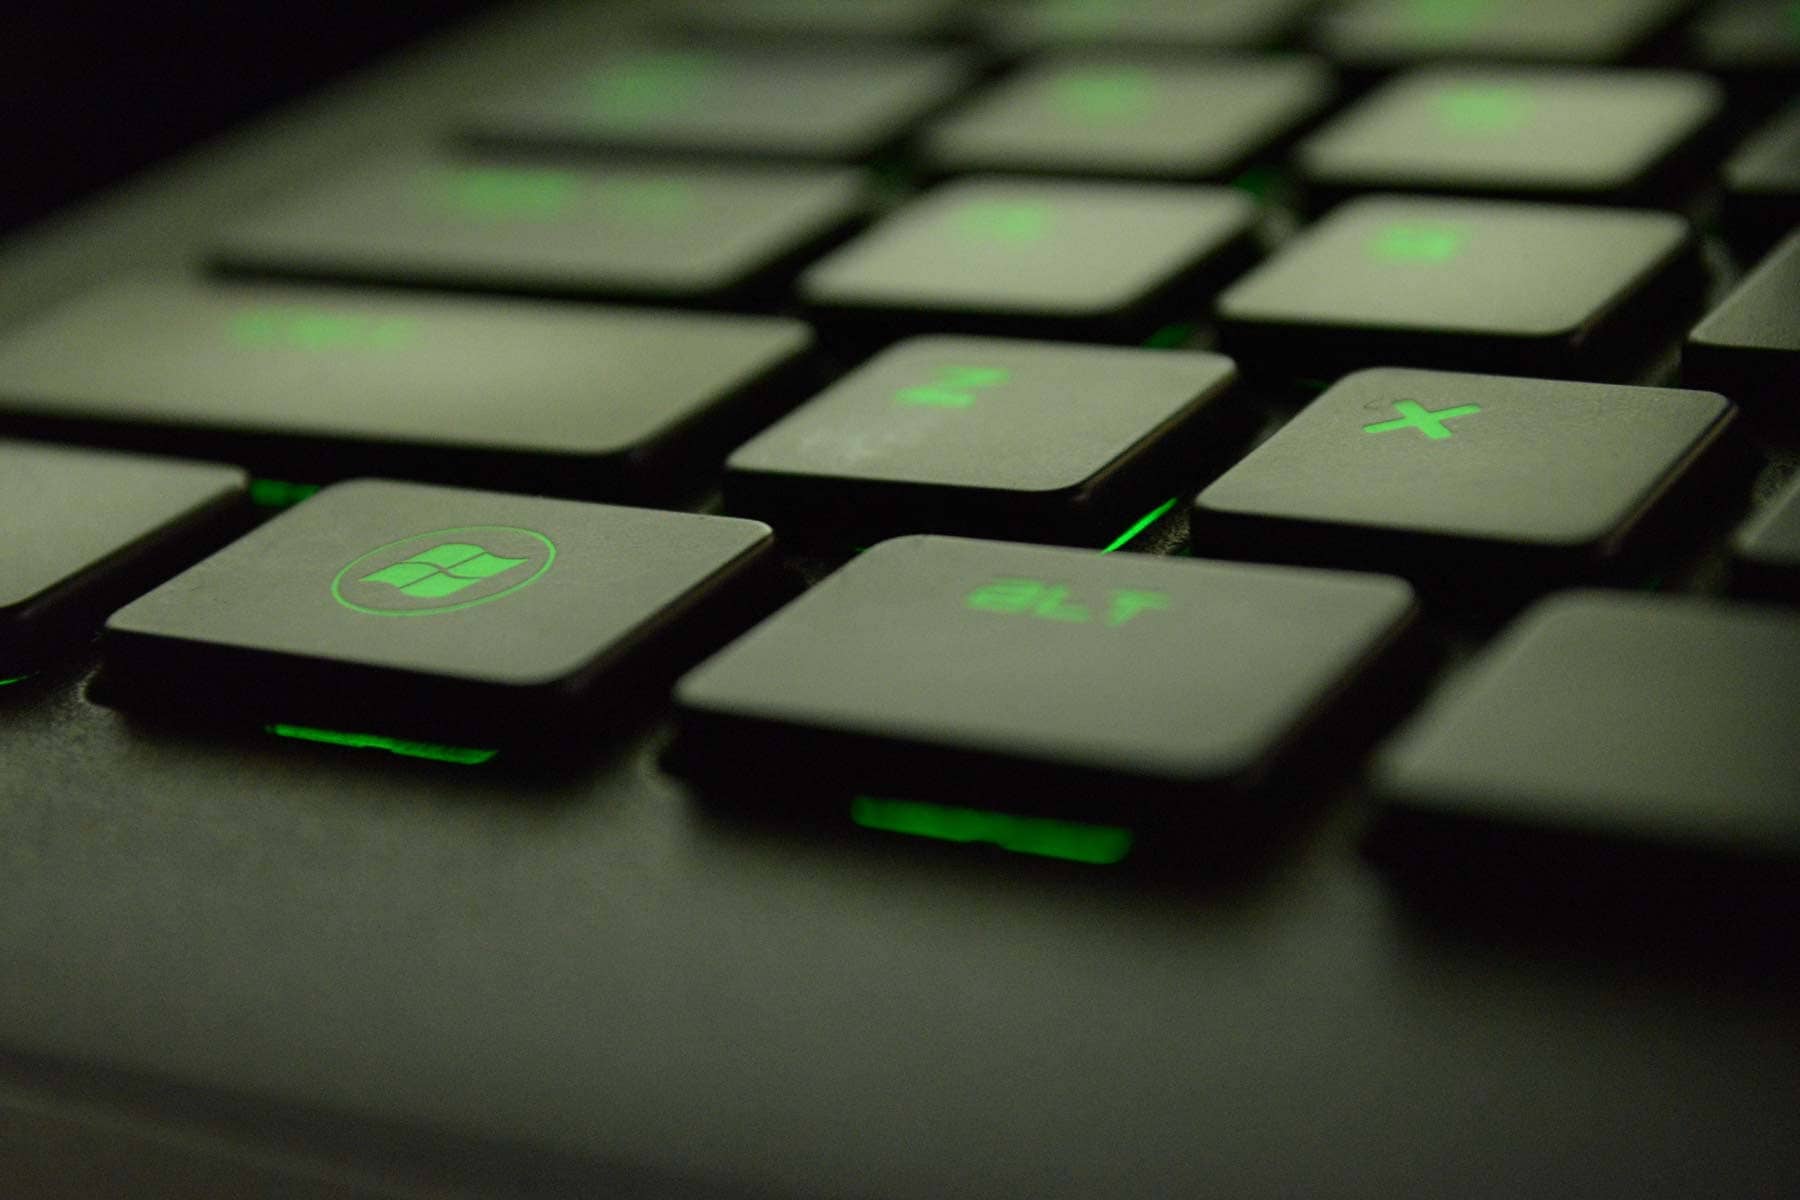 Microsoft Windows 10 laptop keyboard (green)